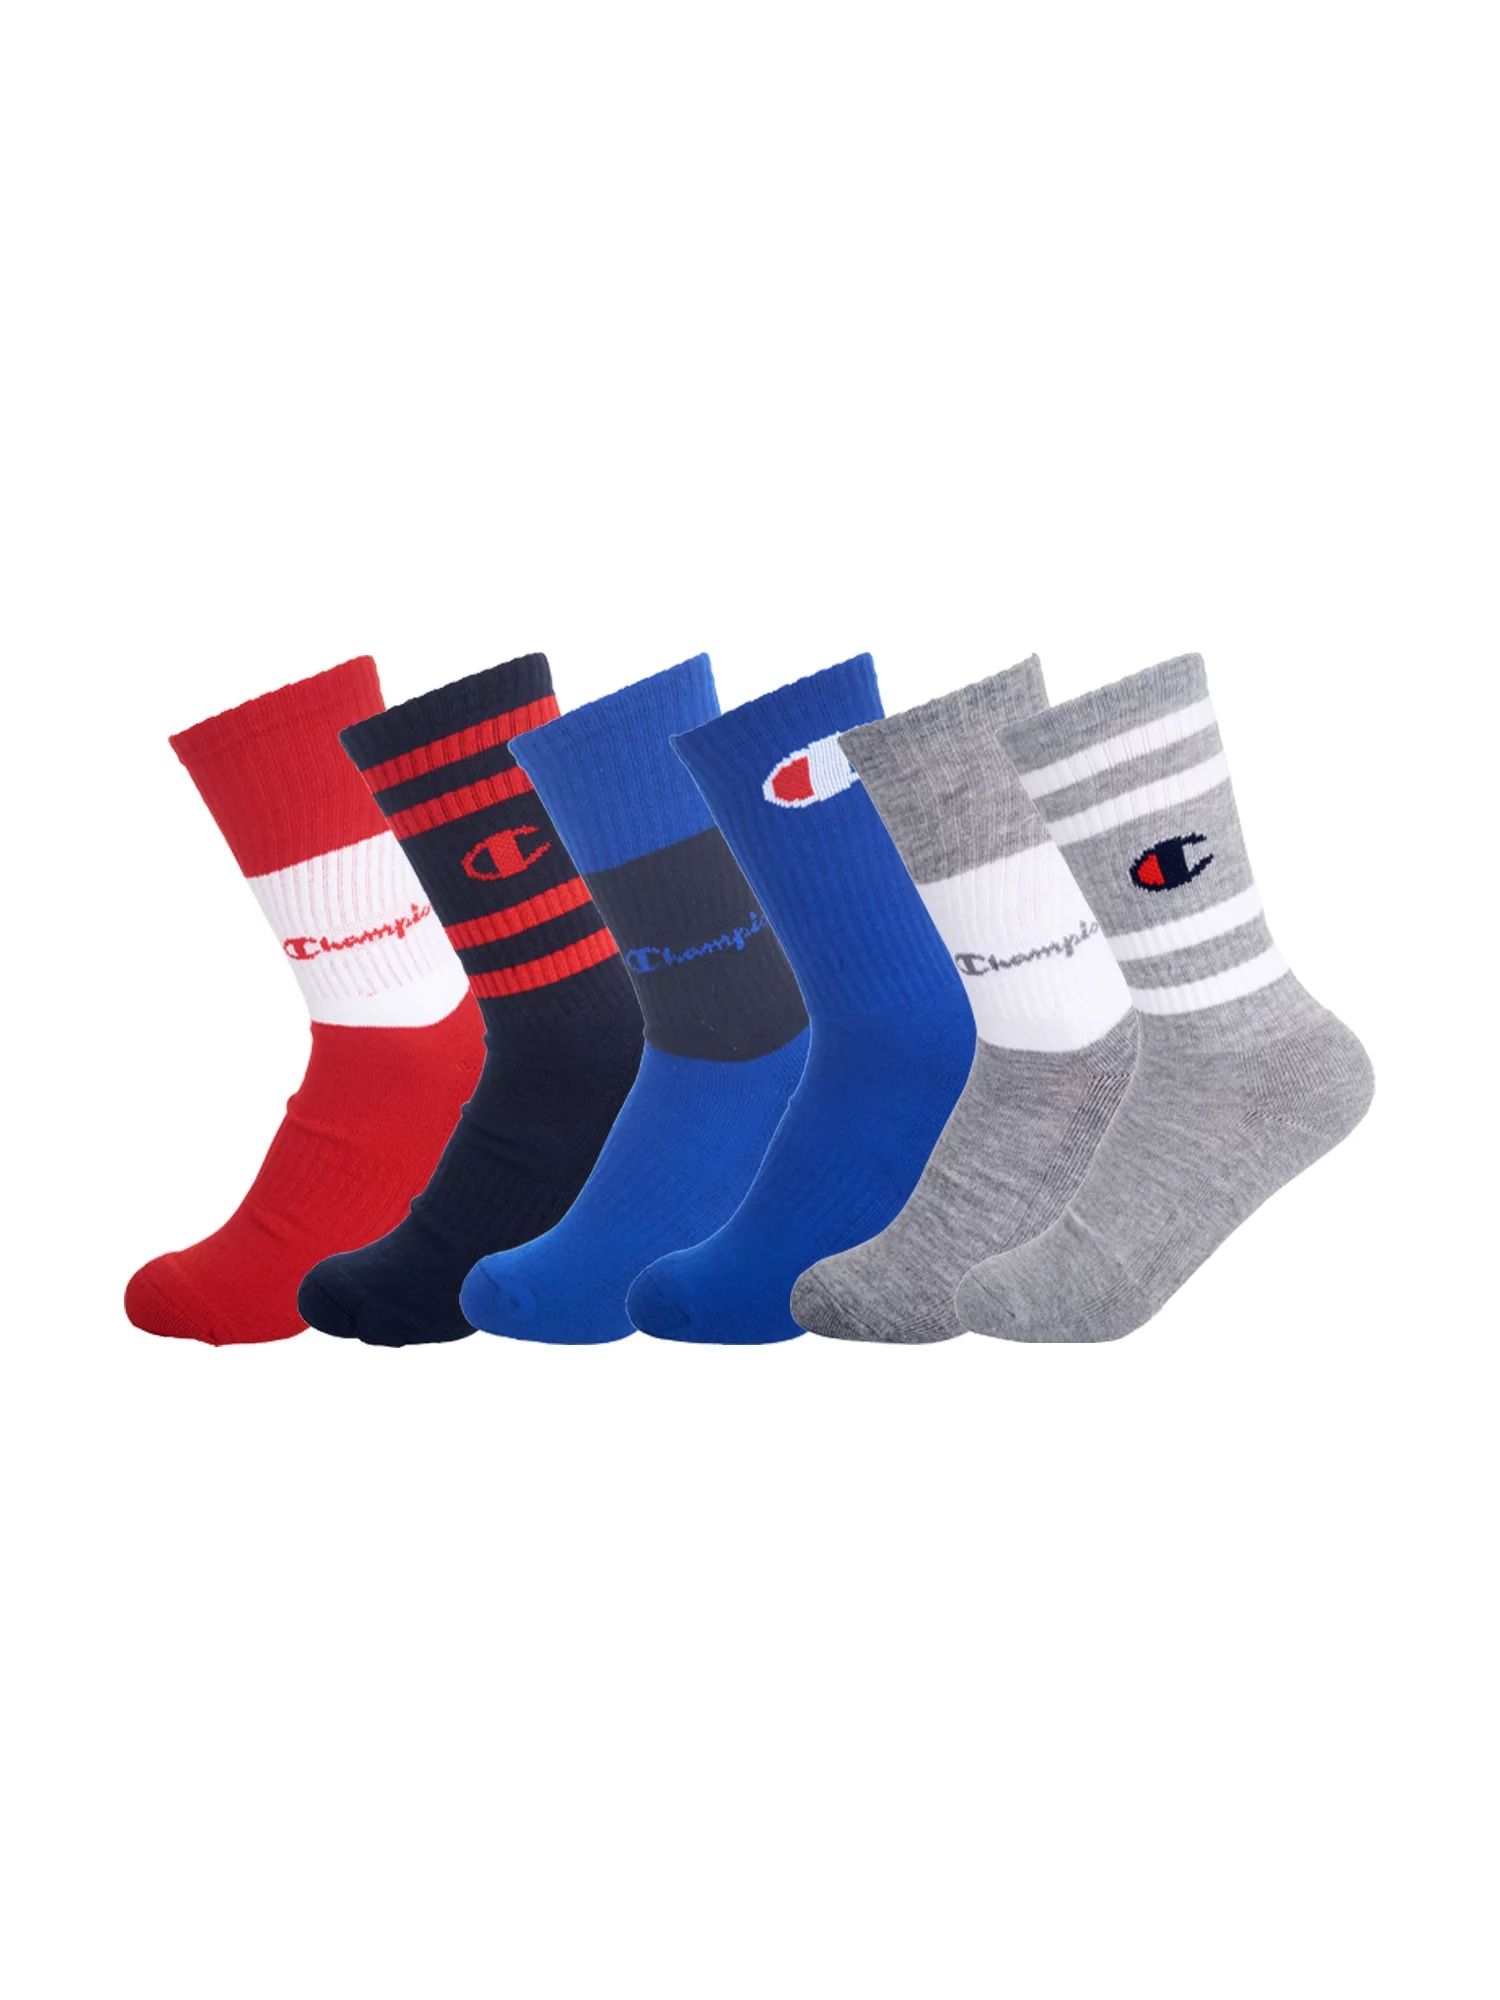 Champion Unisex Socks, 6 Pack Crew Socks, Sizes 7 - 11 | Walmart (US)